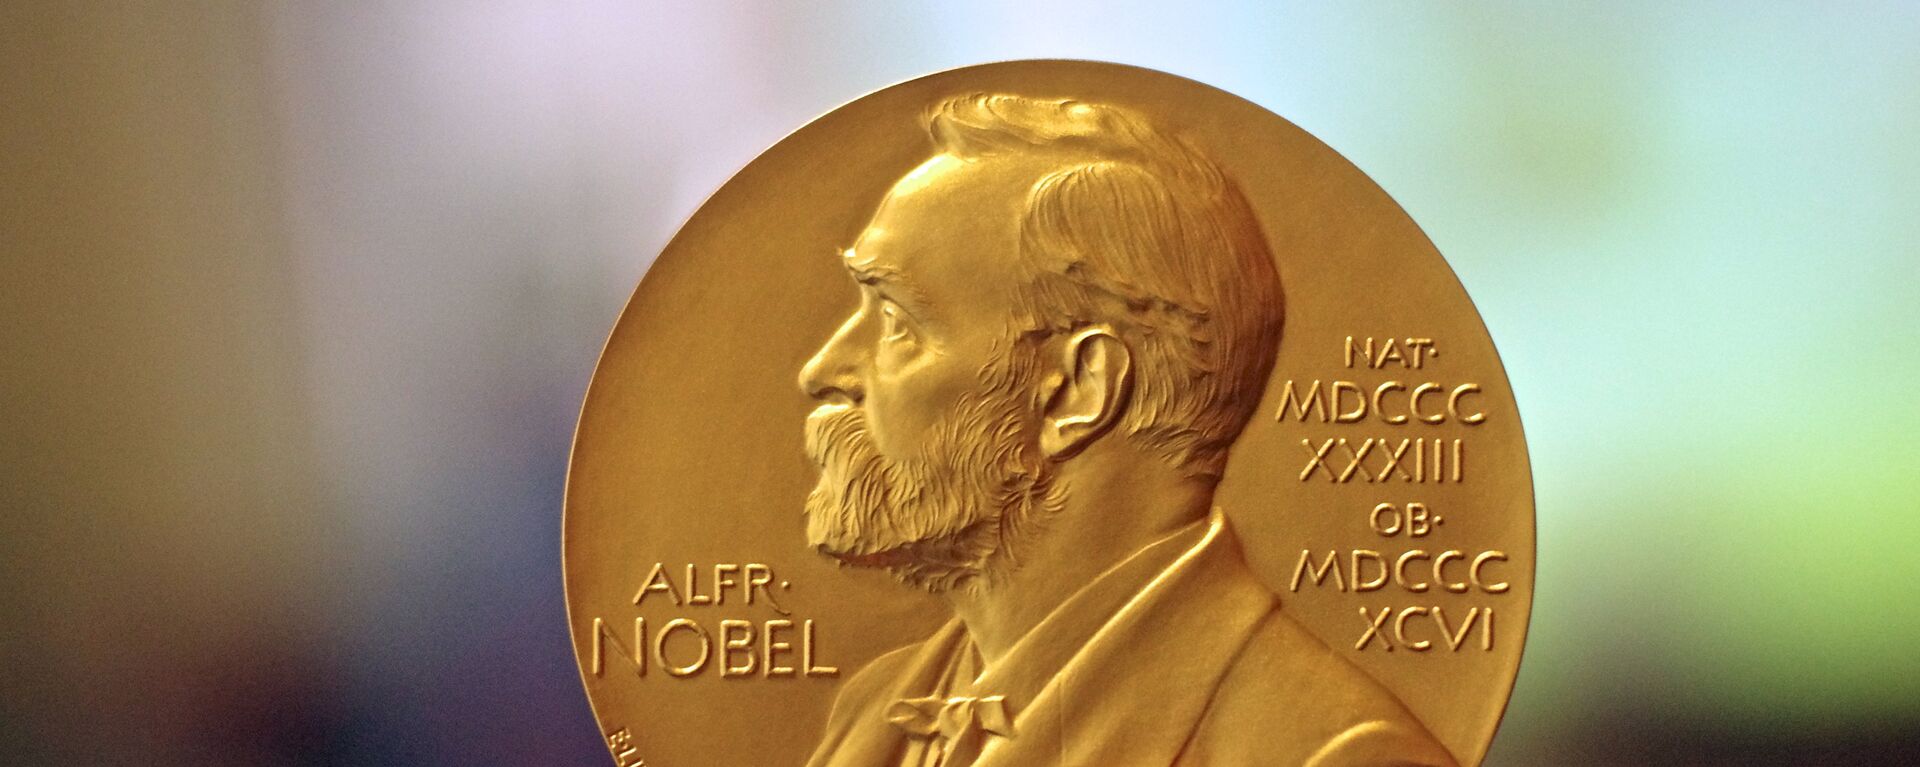 Premio Nobel - Sputnik Mundo, 1920, 05.02.2021